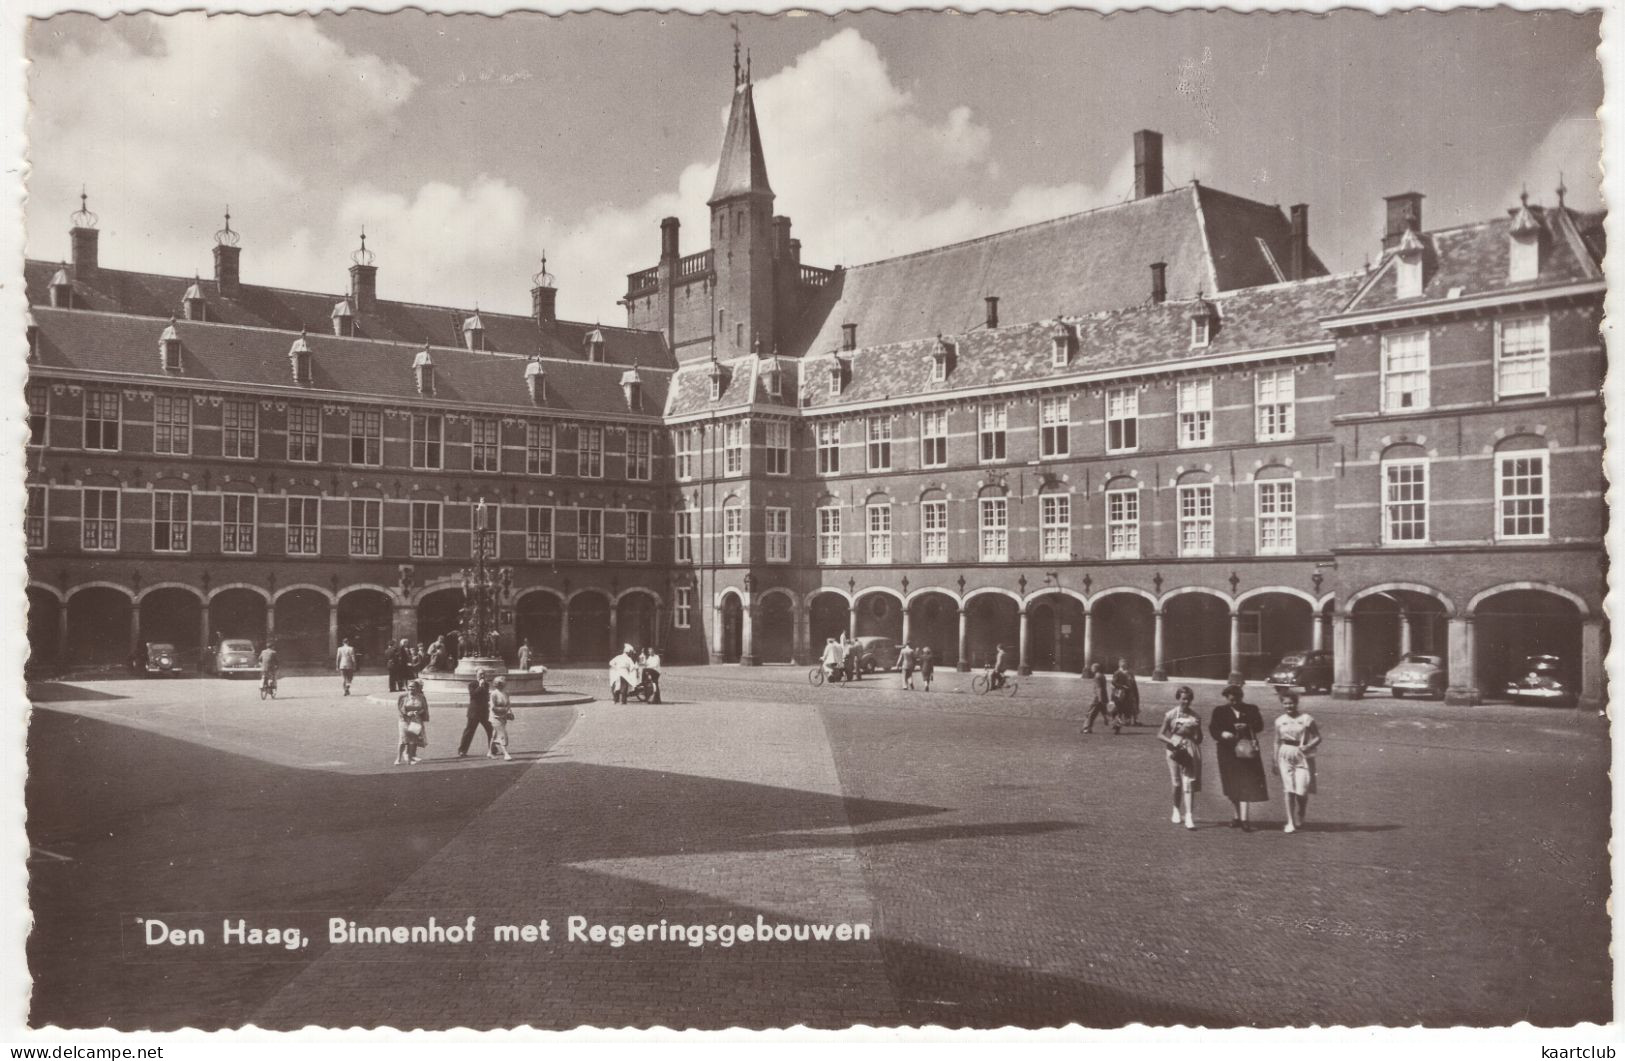 Den Haag: OLDTIMER AUTO'S / CARS & BICYCLES / FIETSEN - Binnenhof Met Regeringsgebouwen - (Holland) - Passenger Cars